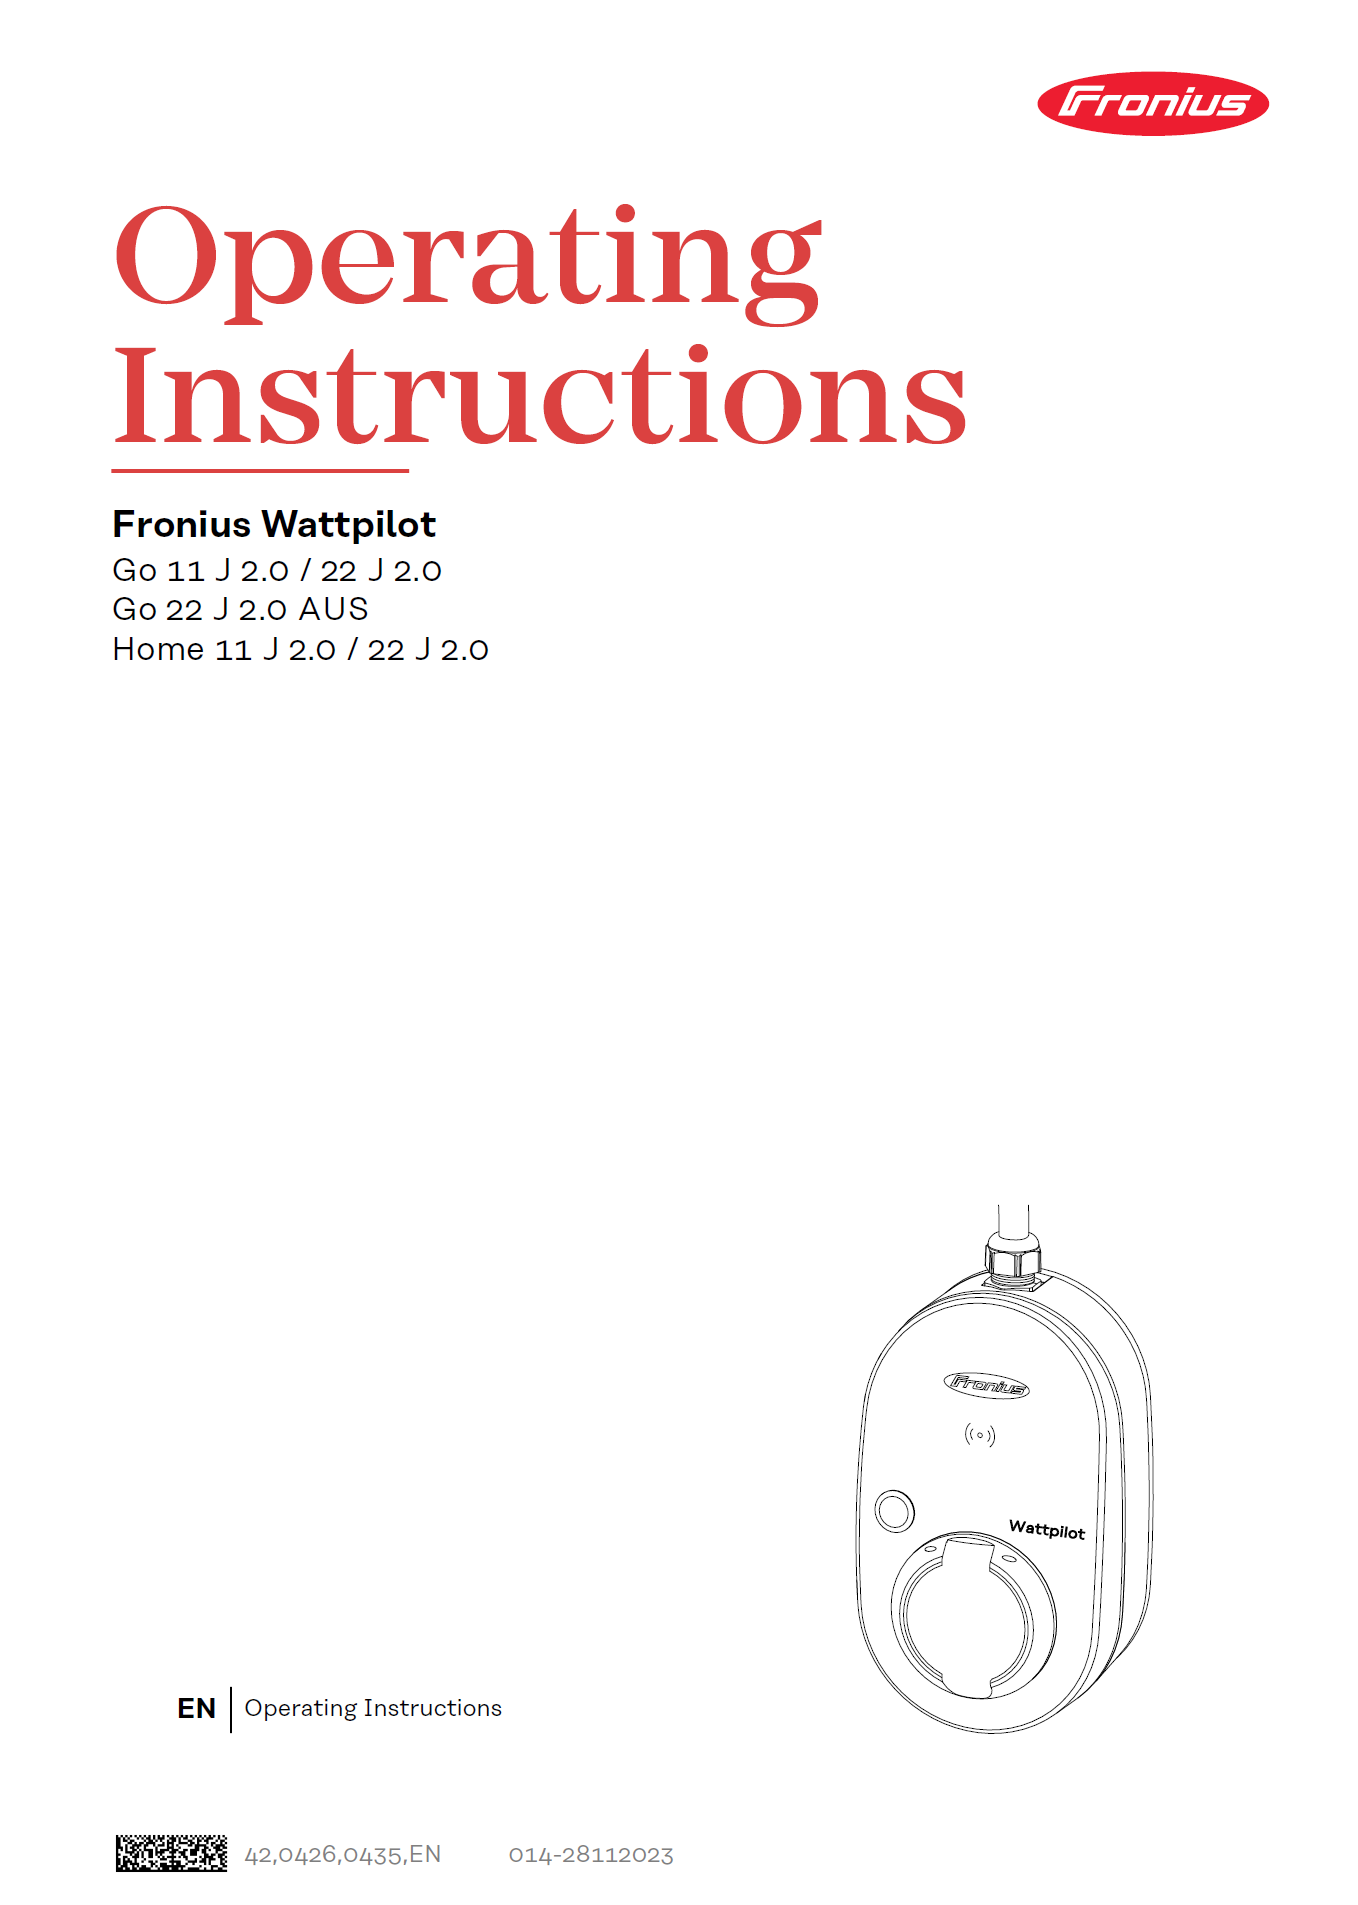 Fronius Wattpilot Operating Instructions